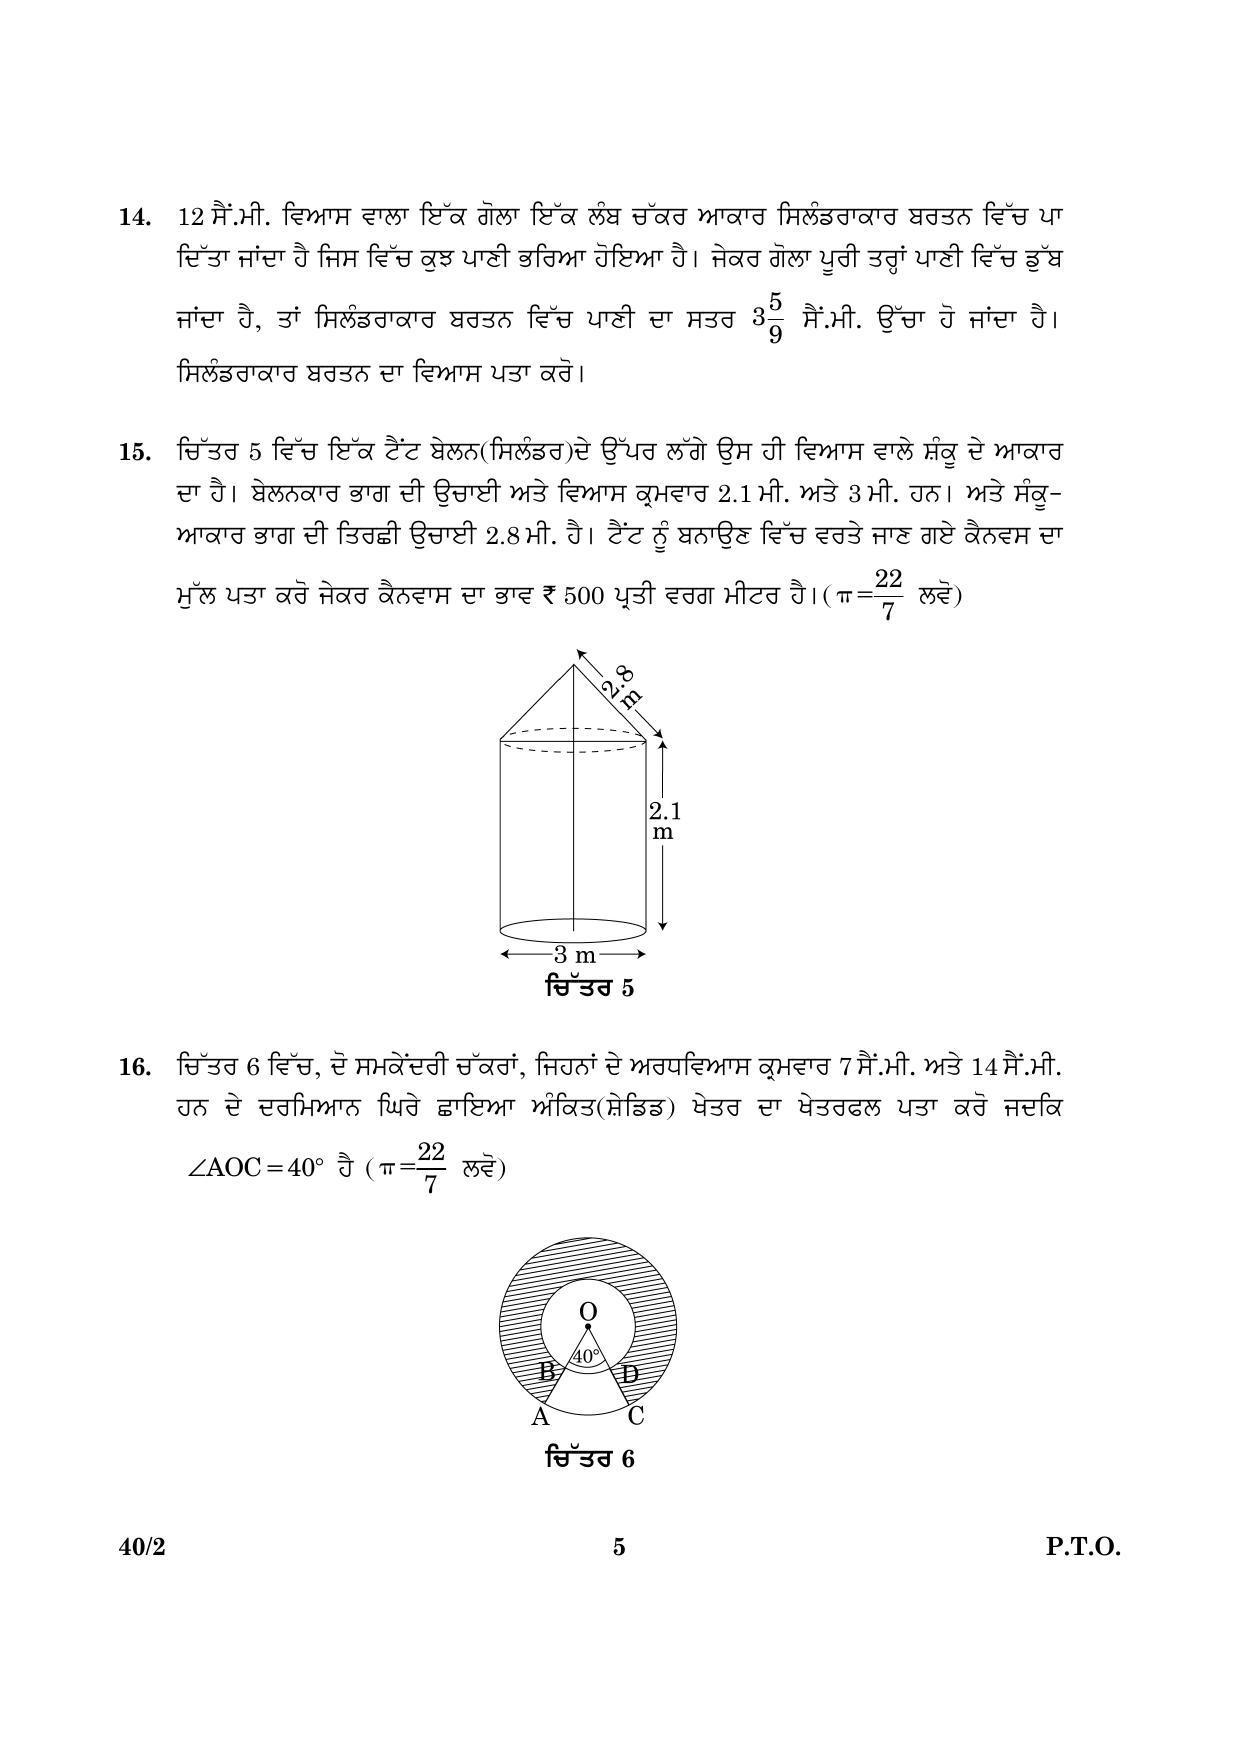 CBSE Class 10 040 Mathematics Punjabi 2 2016 Question Paper - Page 5